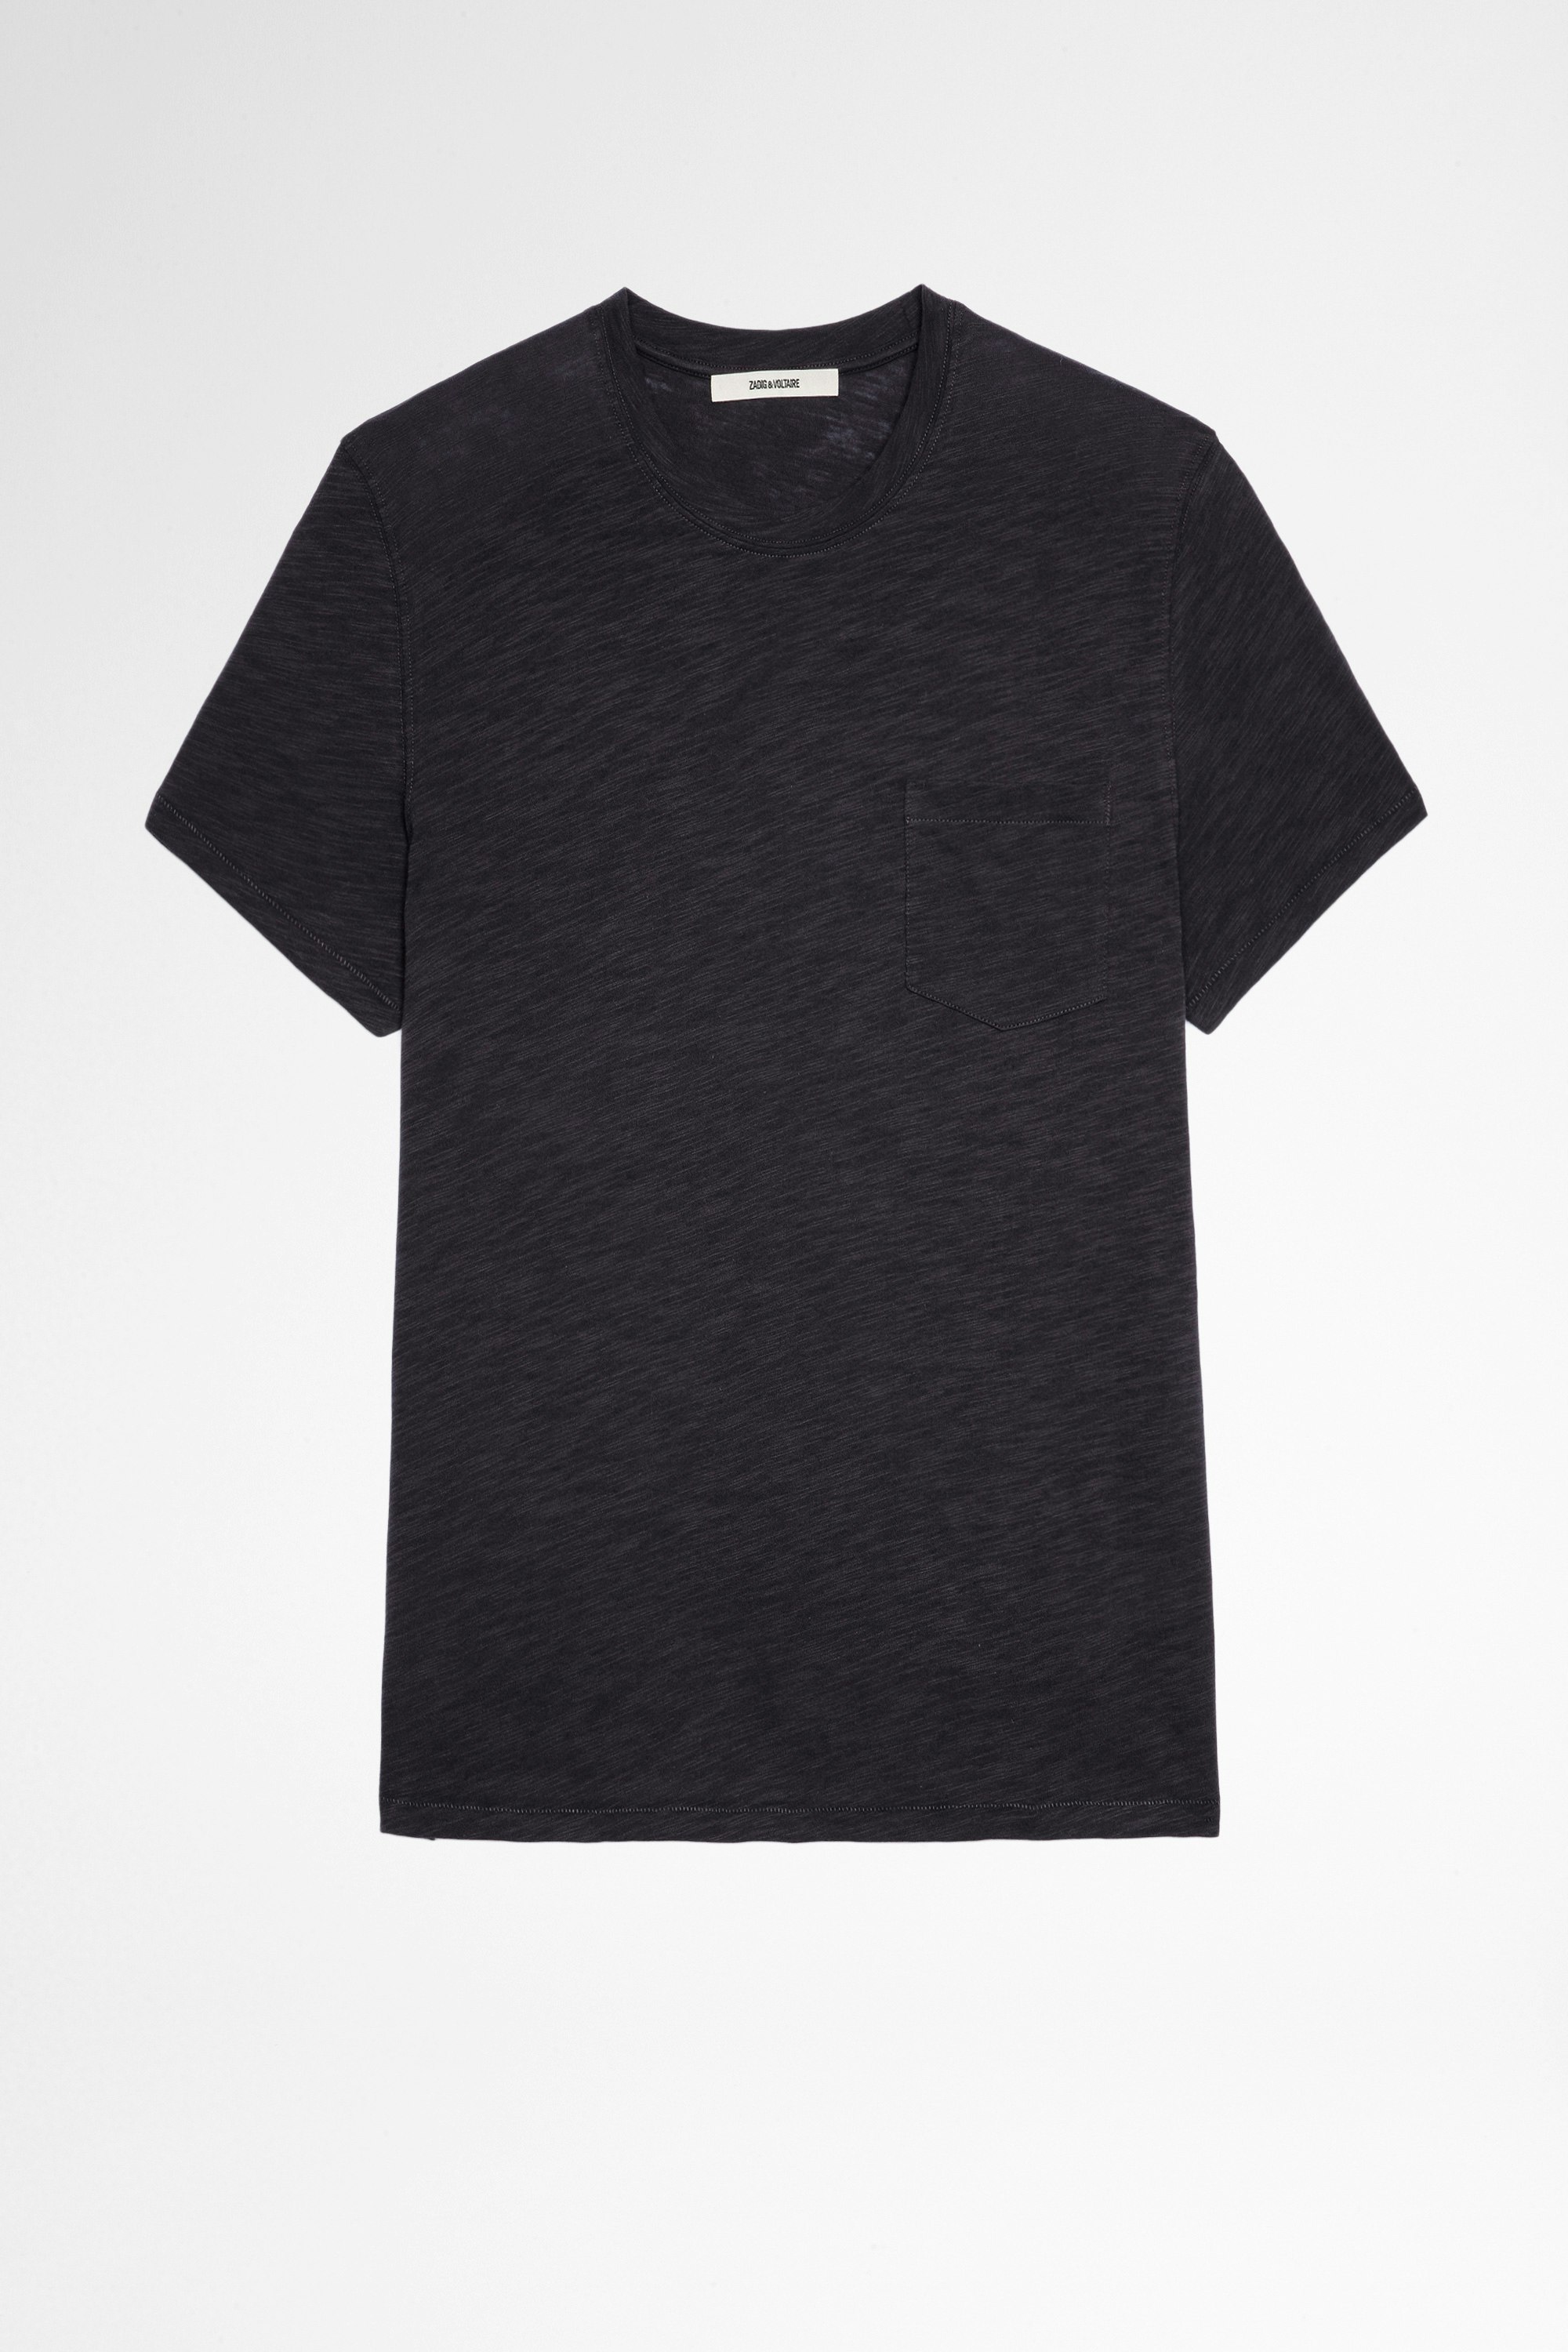 Stockholm Flamme T-Shirt Men's black cotton t-shirt with skull print